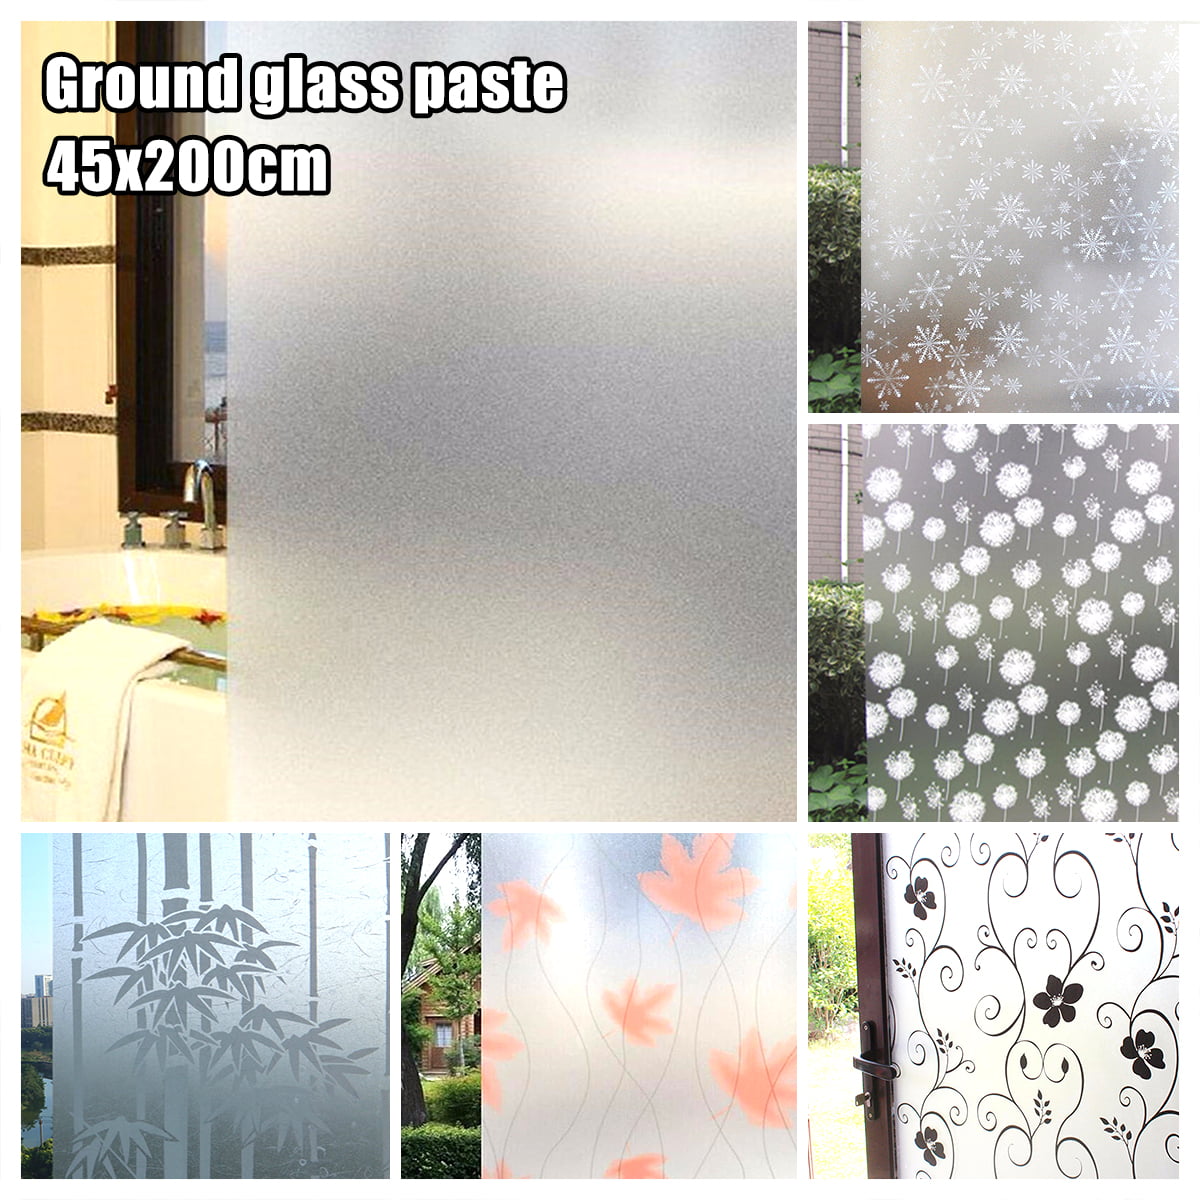 Waterproof Window Glass Film Sticker Frosted Static Cling Bathroom Window Decal 